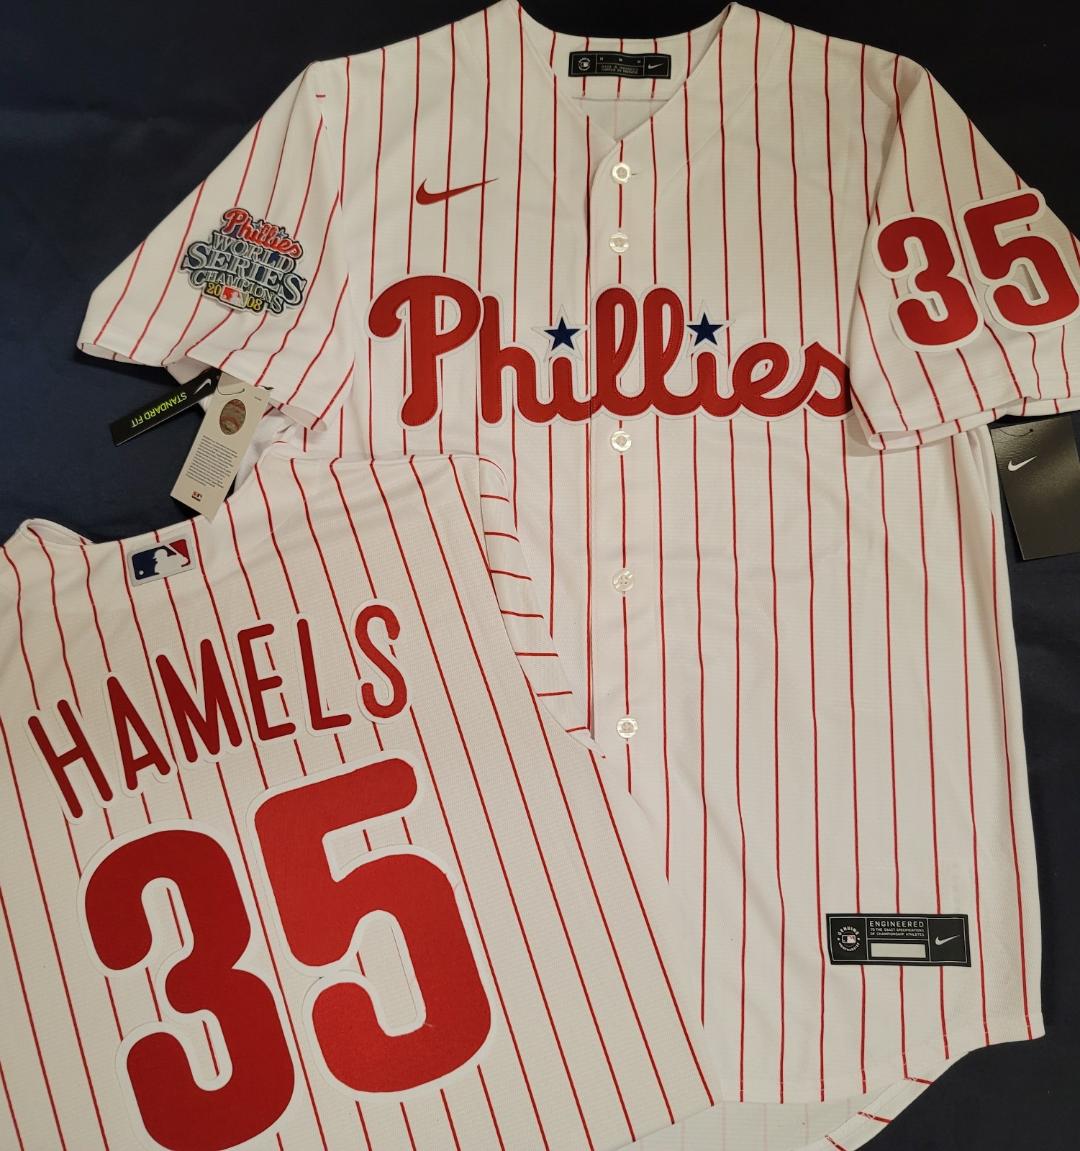 Cole Hamels 2008 Philadelphia Phillies World Series Home/Road/Alt